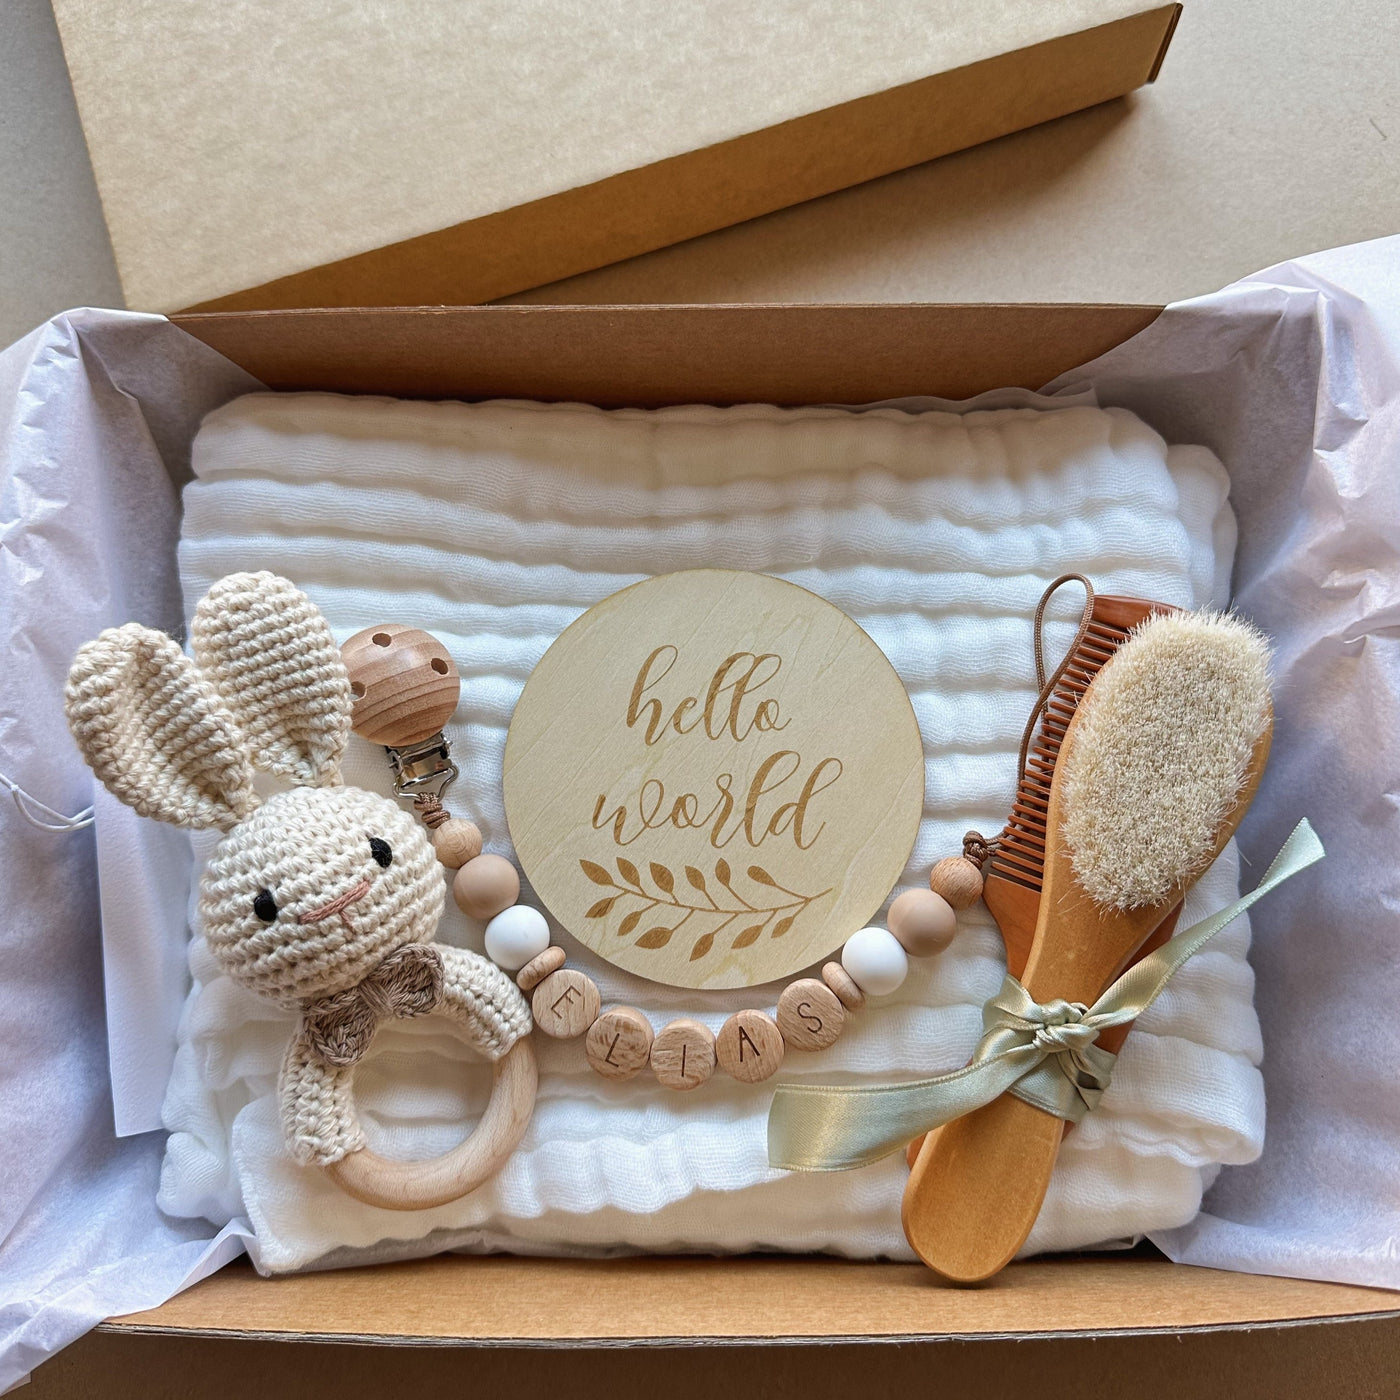 Baby Gift Box - Welcome Mussola Completa - Baby Gift Box - Baby Rainbow Shop - P.IVA 04847500230